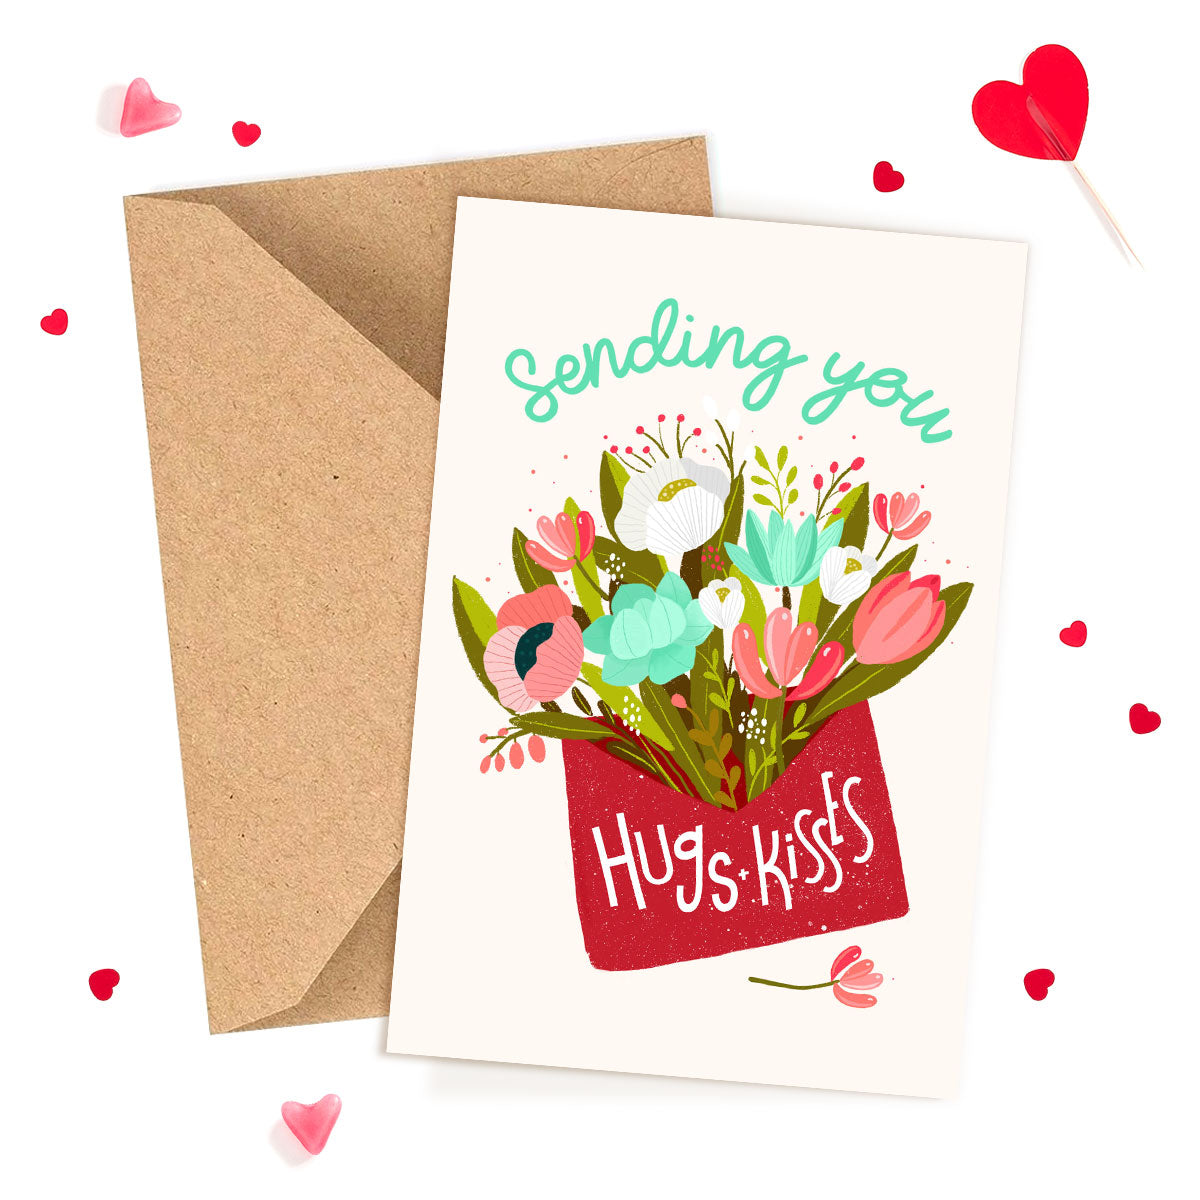 Sending You Hugs and Kisses Card